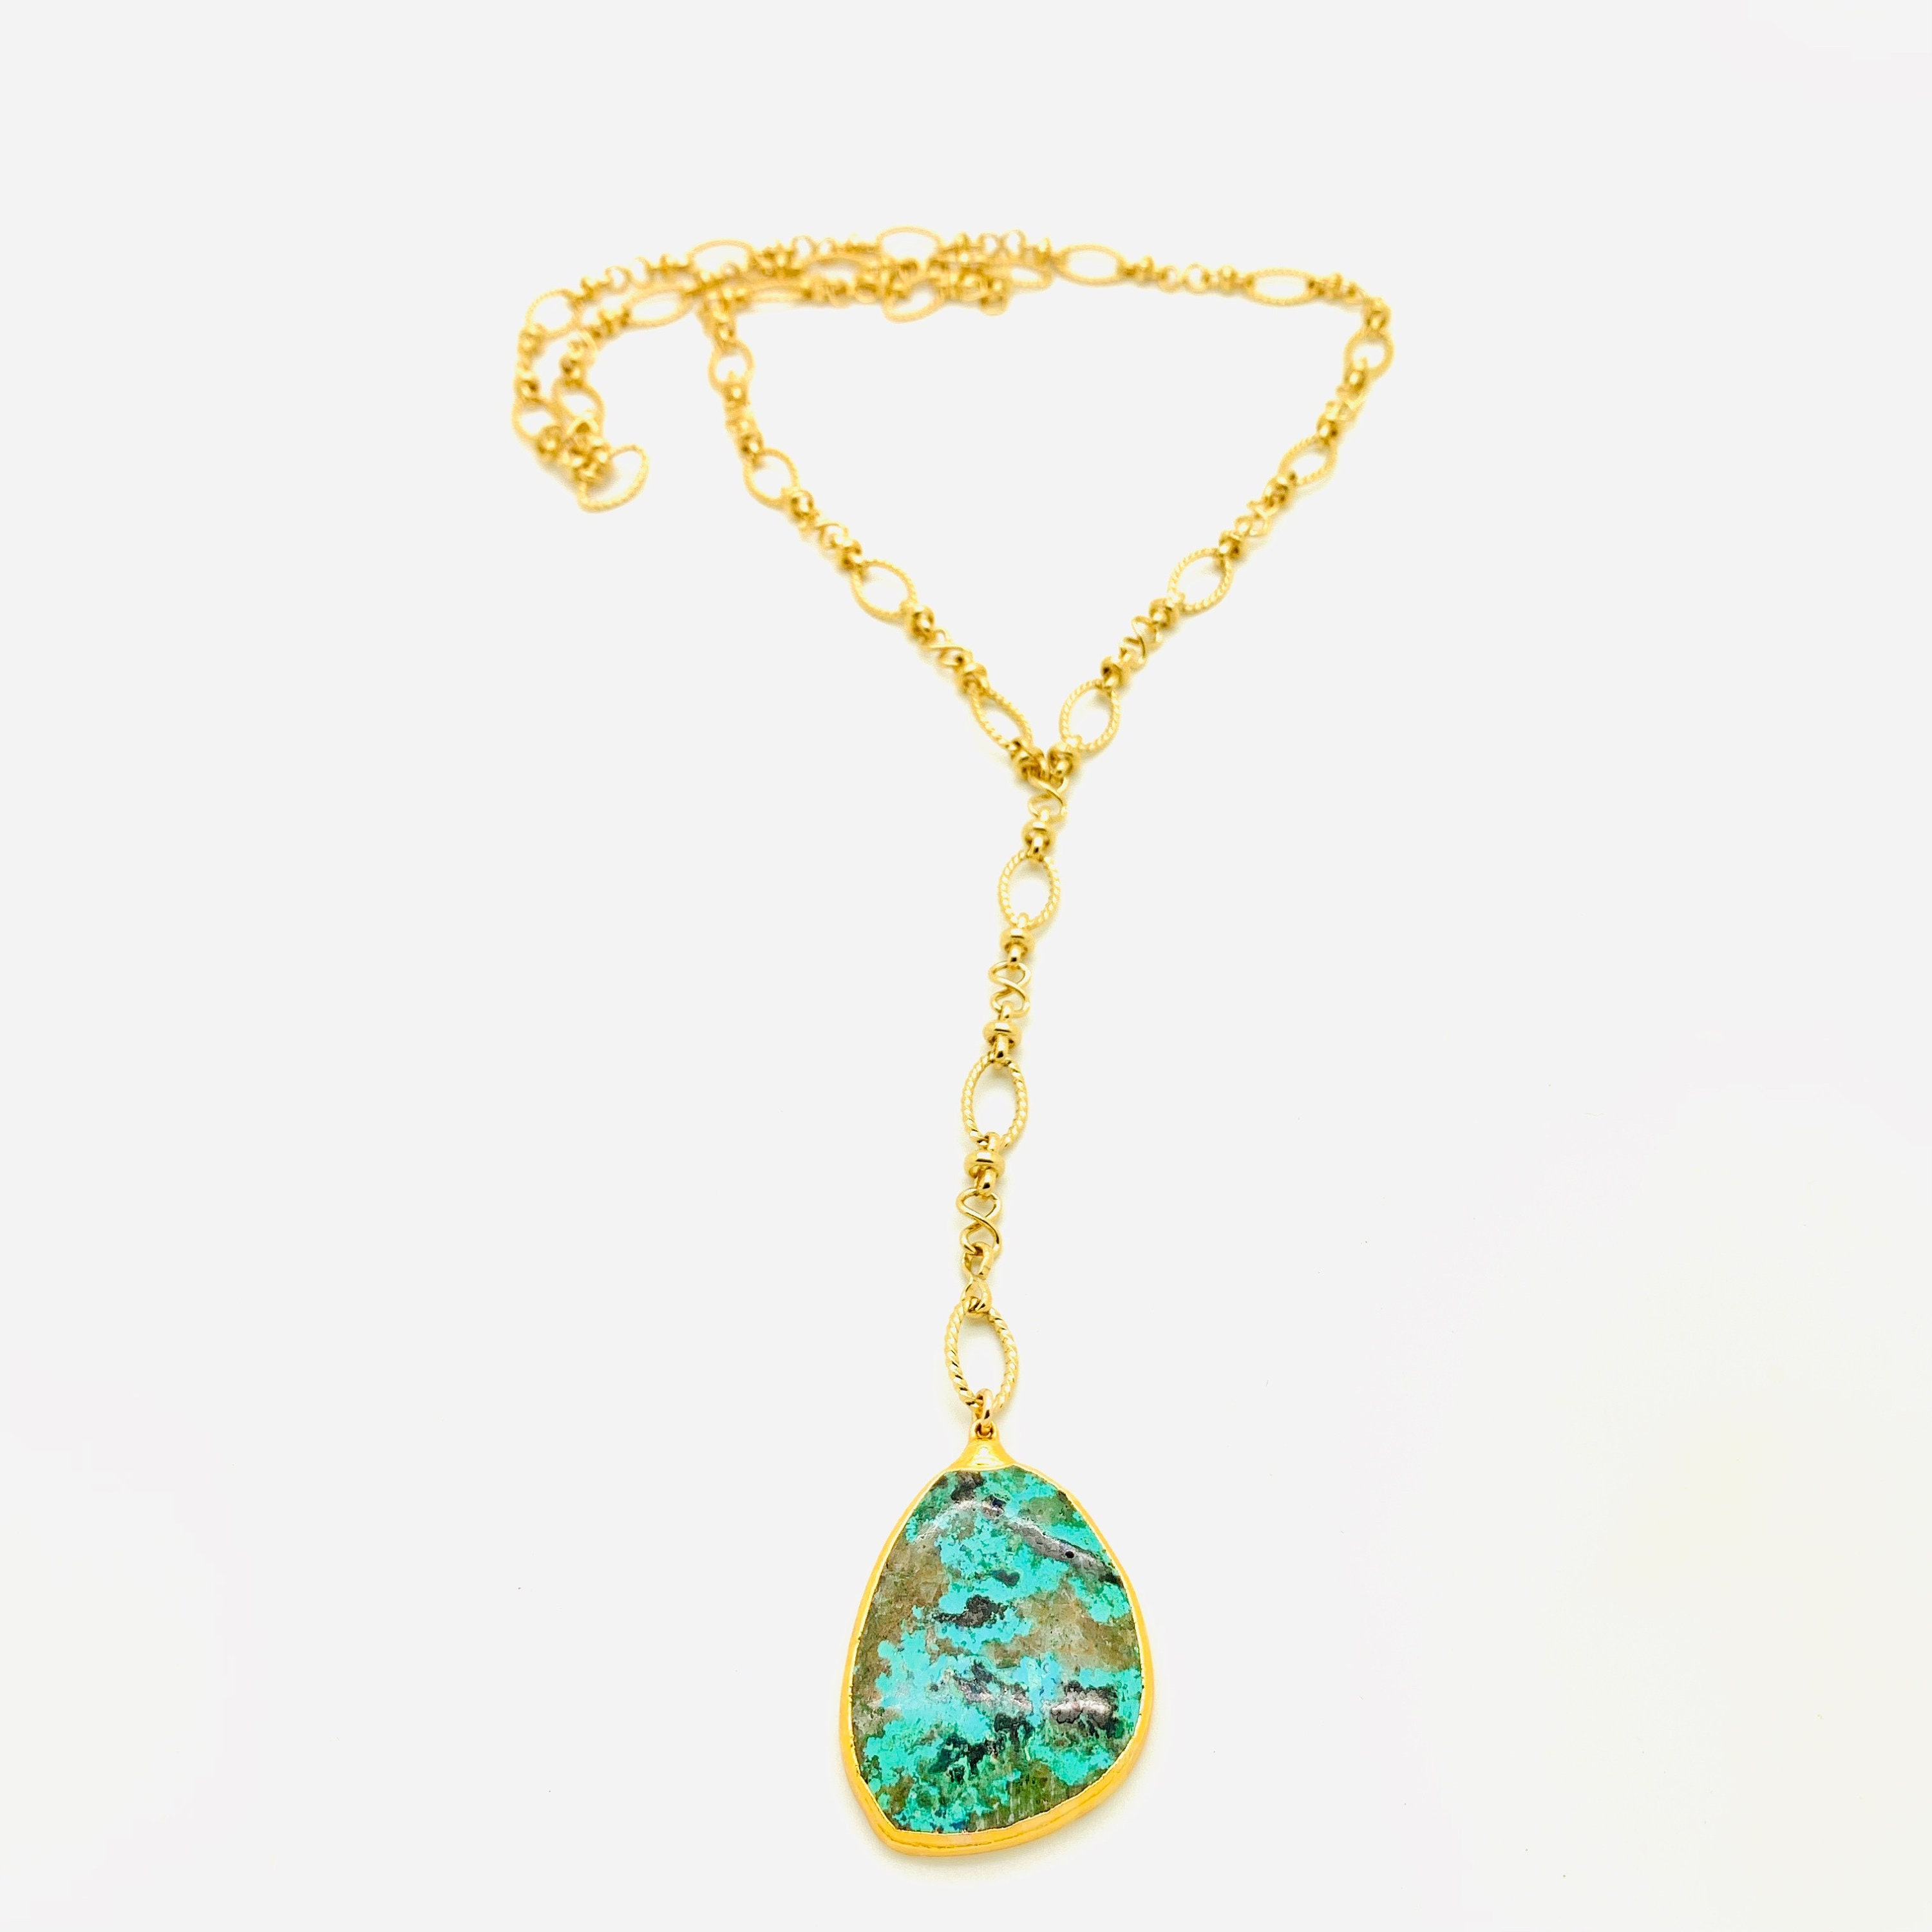 Gold Necklace With Turquoise Pendant - Etsy UK